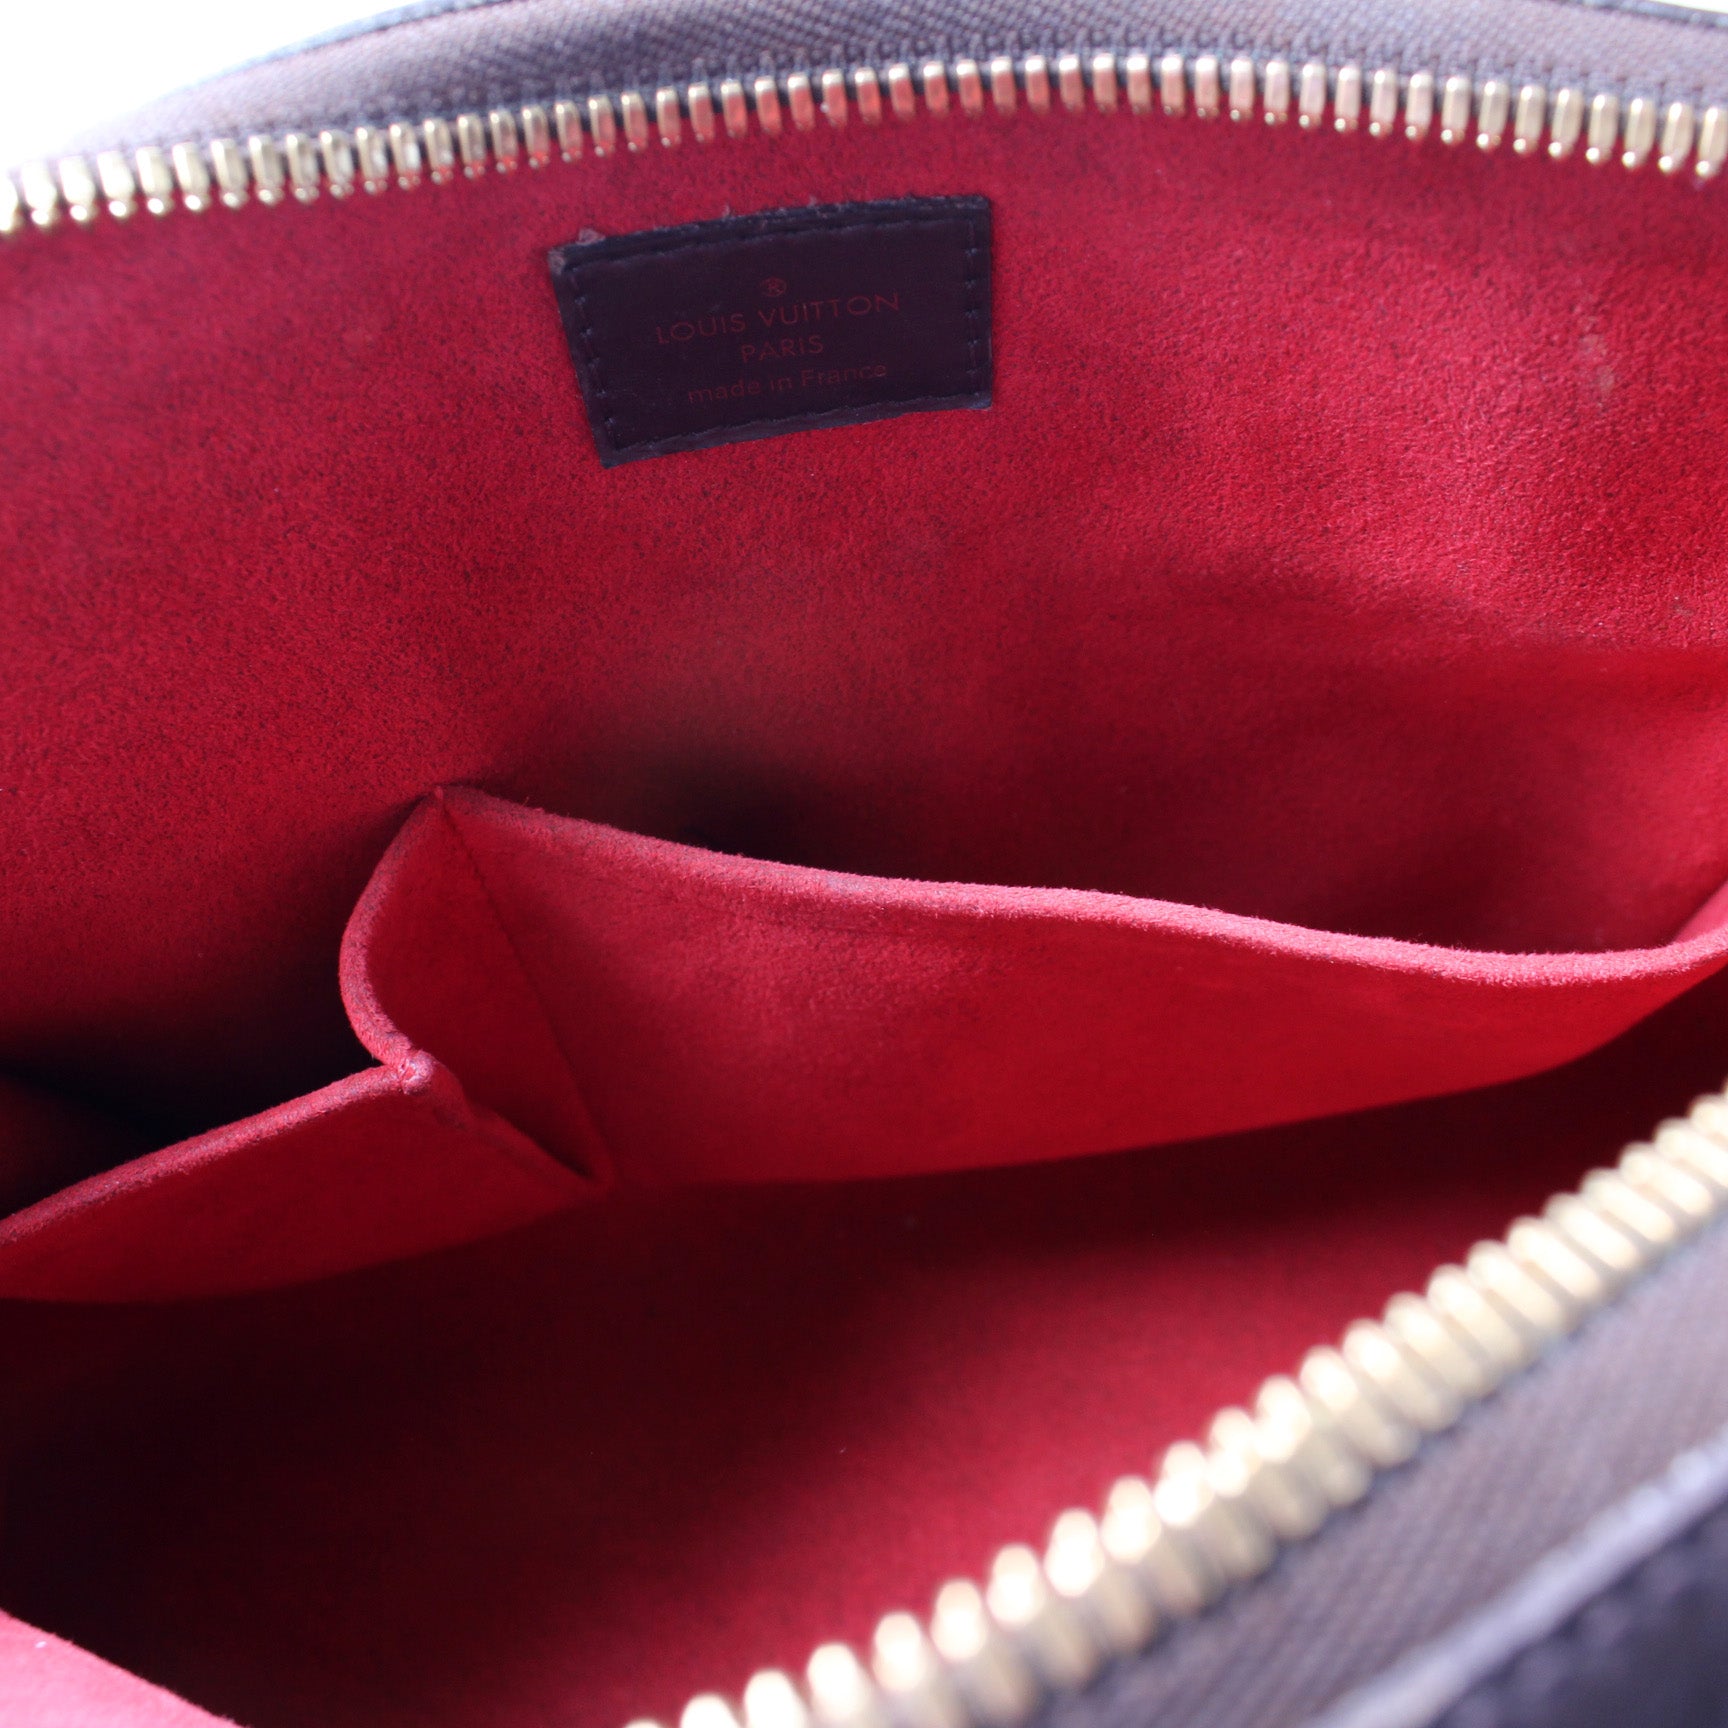 Trevi PM Ebene – Keeks Designer Handbags